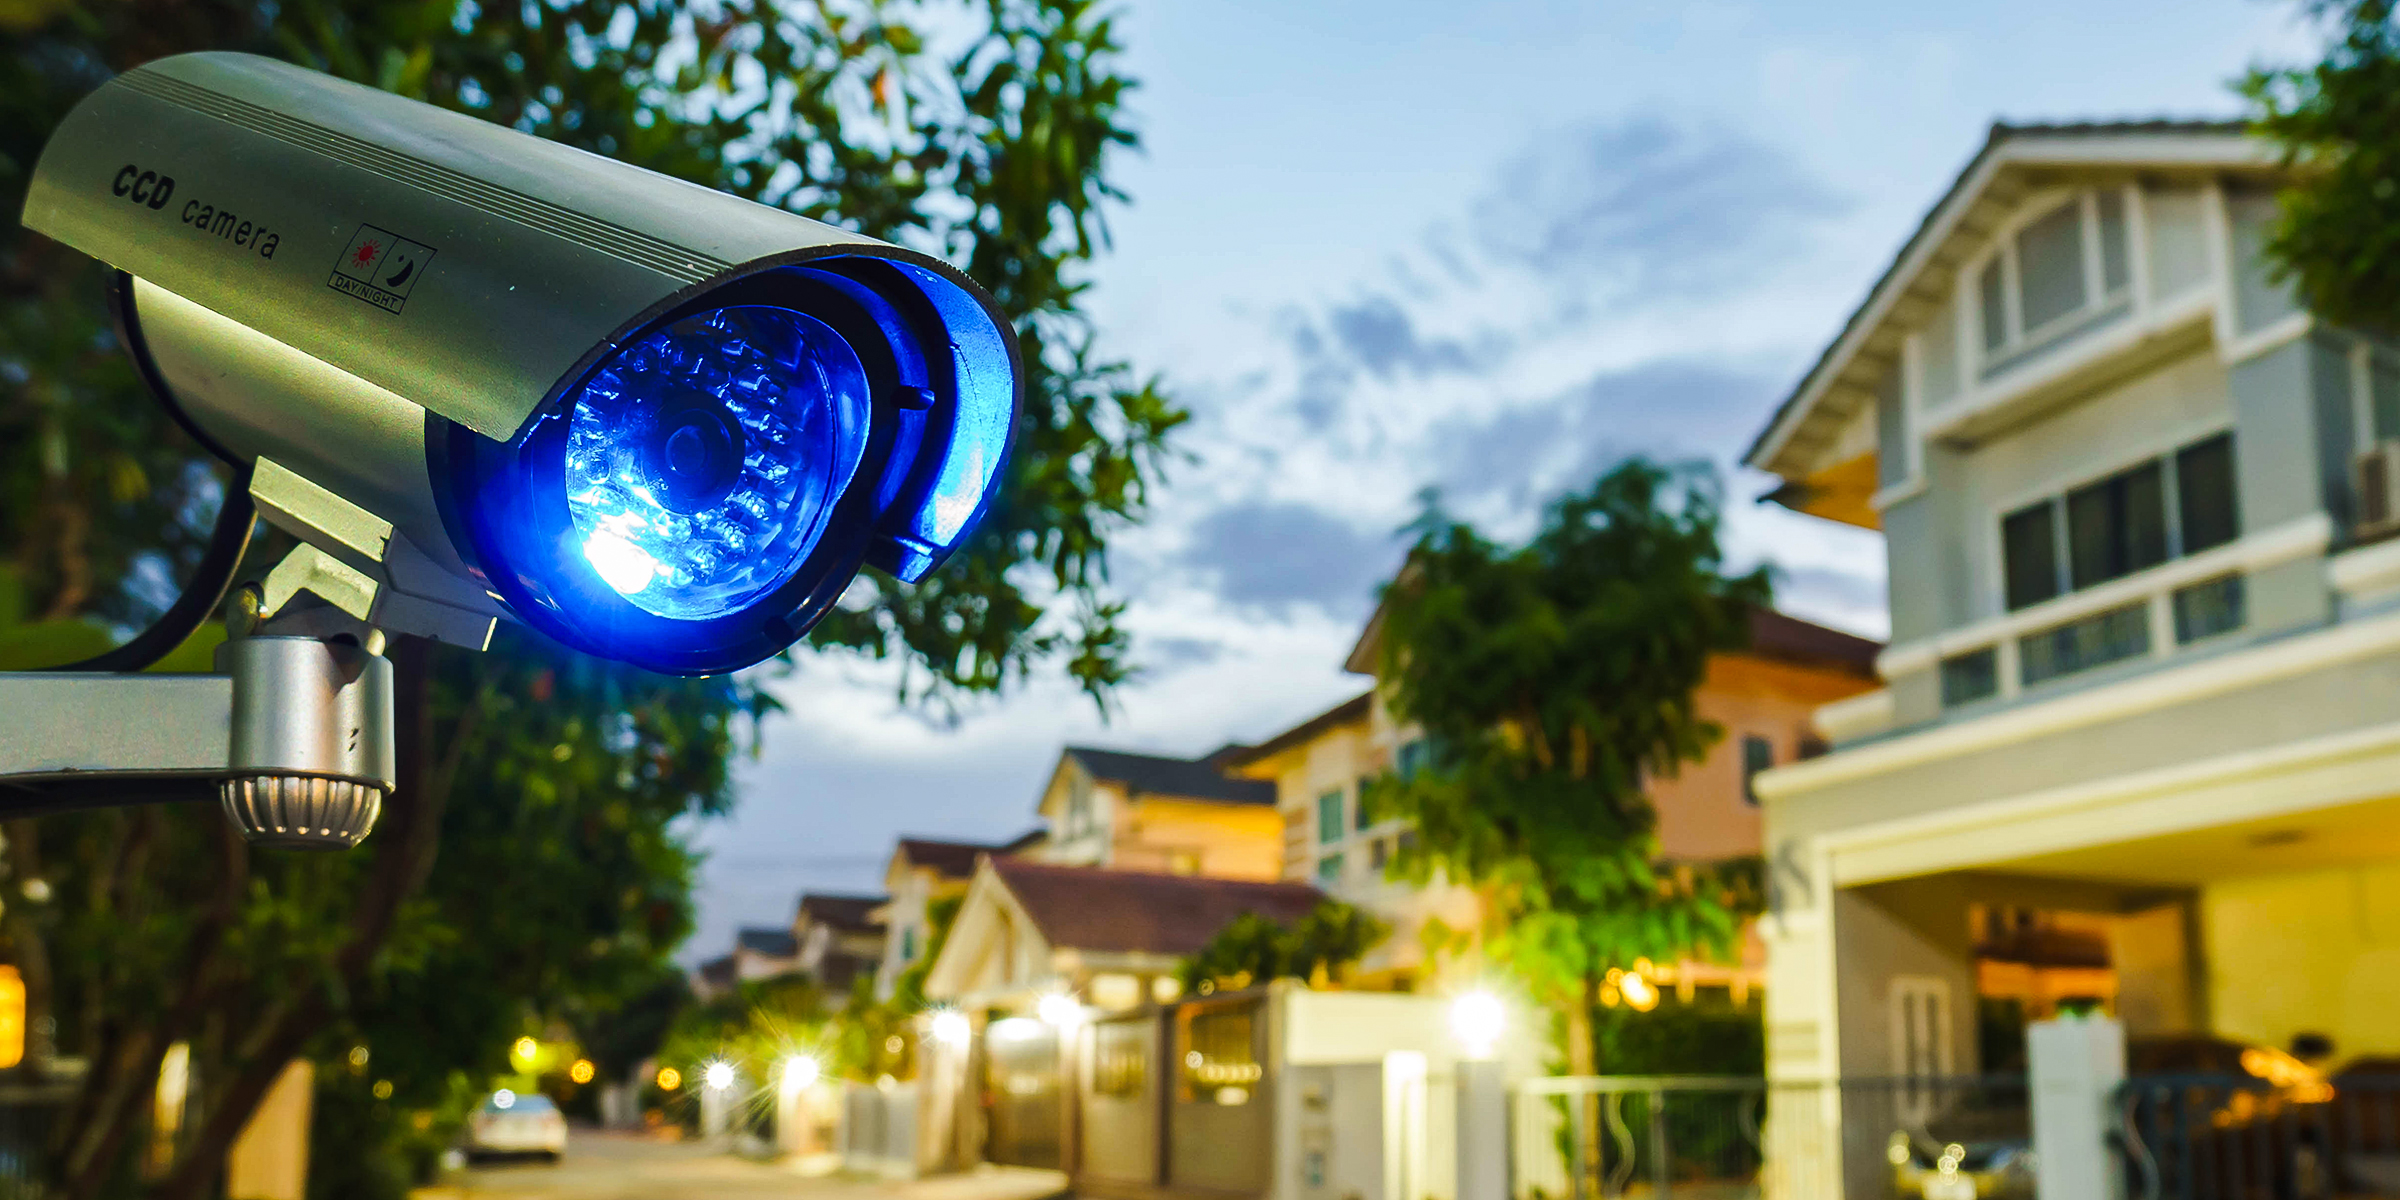 A neighborhood security camera | Source: Shutterstock